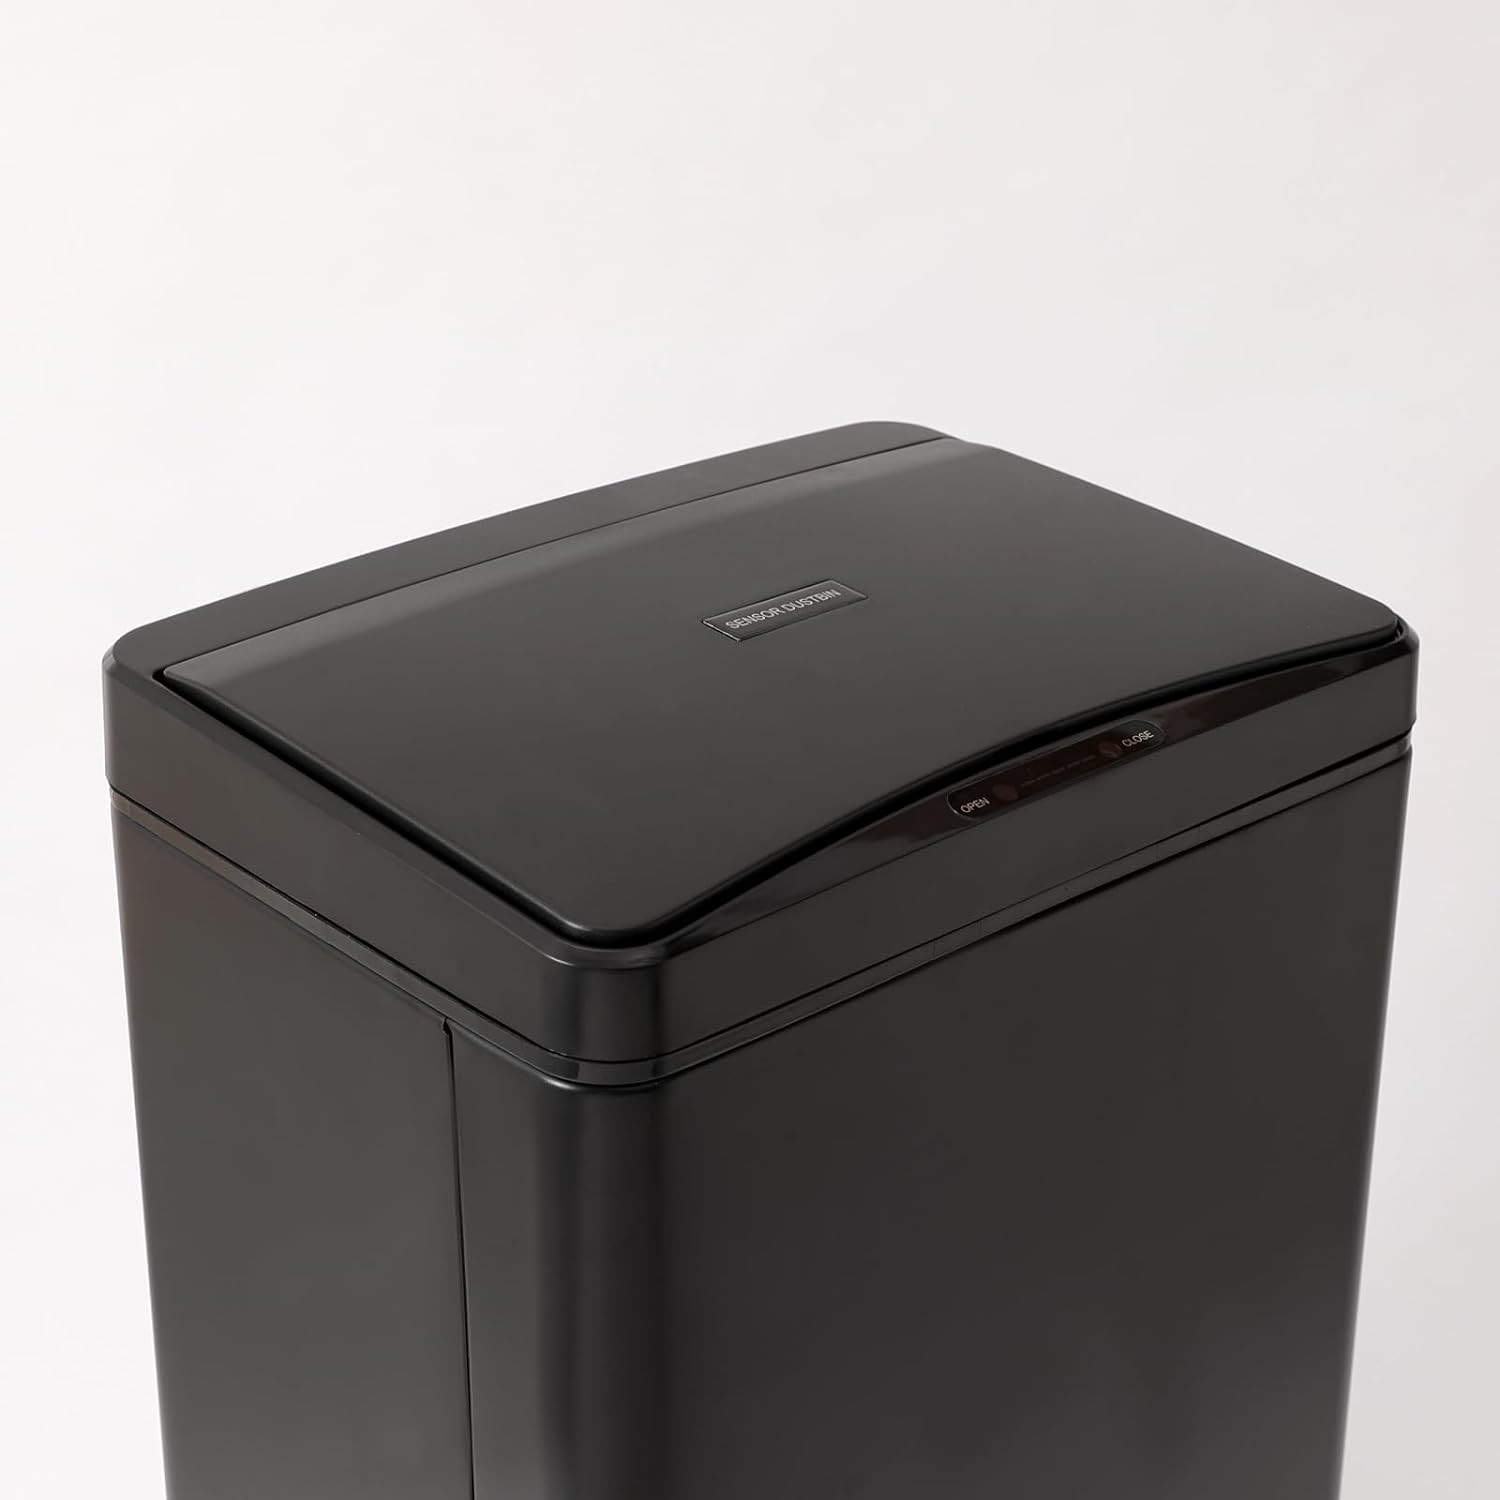 Kuber Industries Sensor Dustbin | Rectangular Big Sensor Dustbin | Touchless Trash Can | Smart Dustbin for Bedroom-Office-Living Room | Automatic Garbage Can | HN-ZS02-BLK-42L | Black